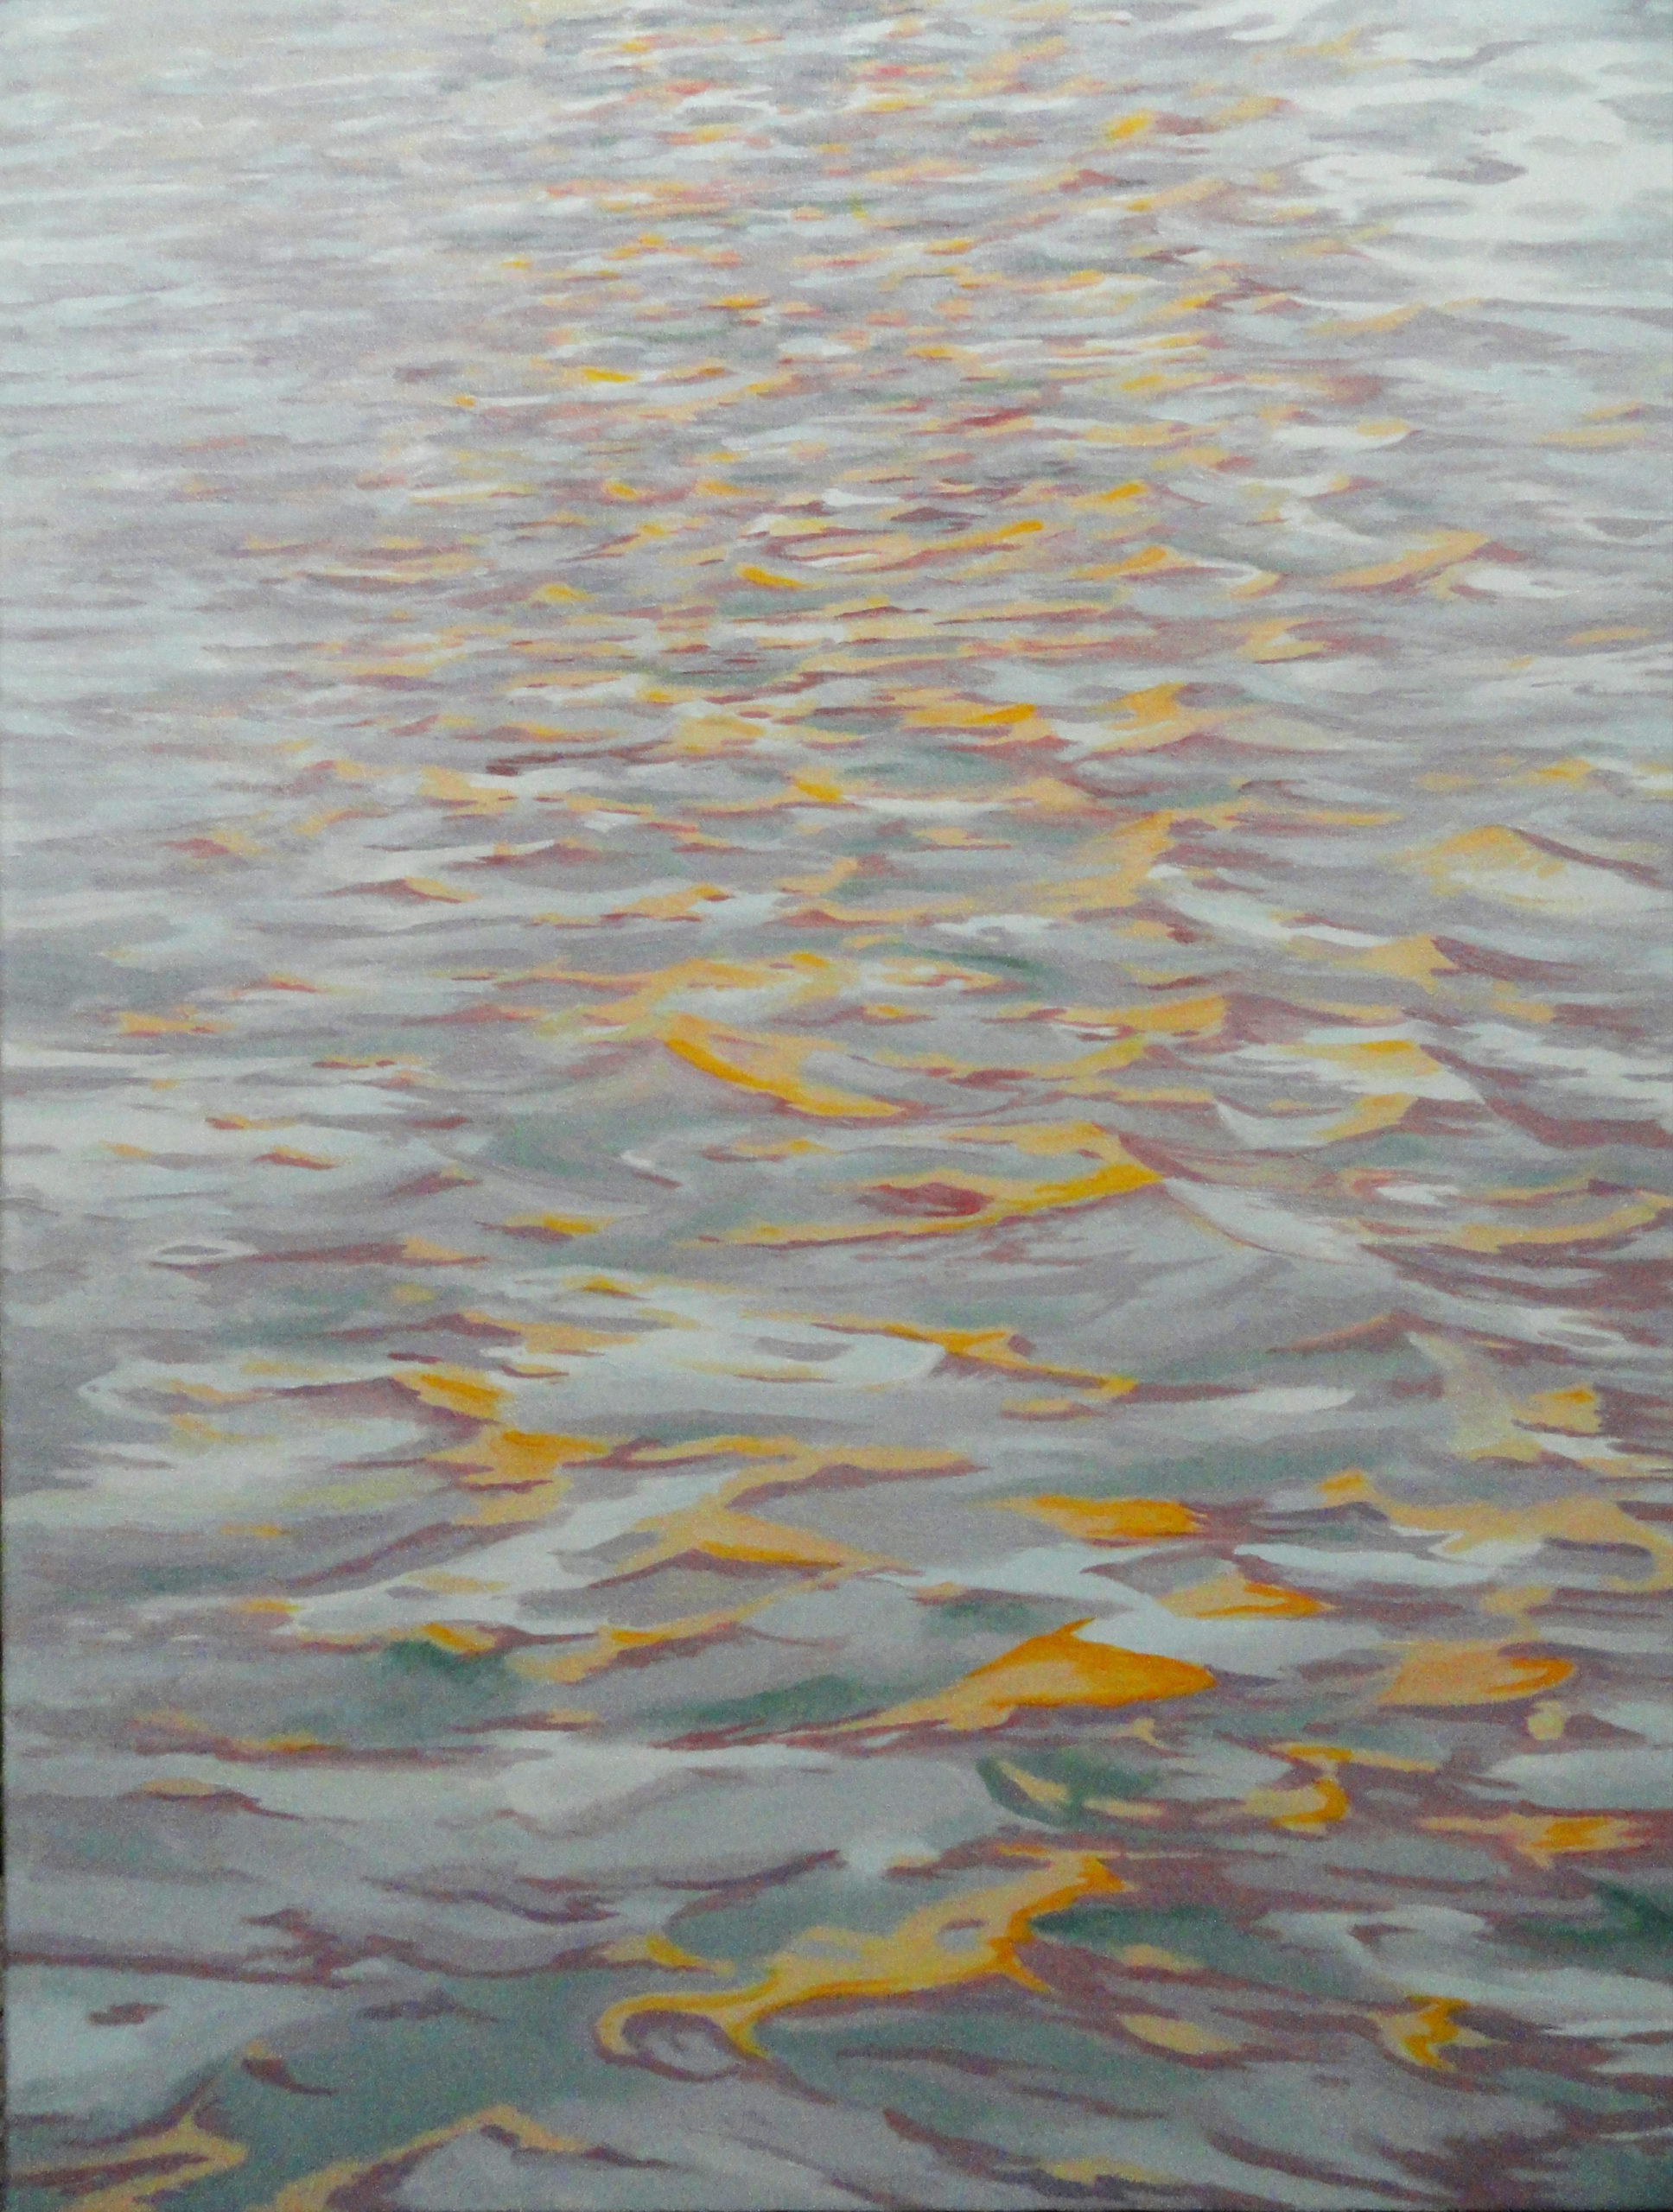 Batten Dock by Sue Sneddon, oil on canvas, 30 x 24 at Craven Allen Gallery 4500